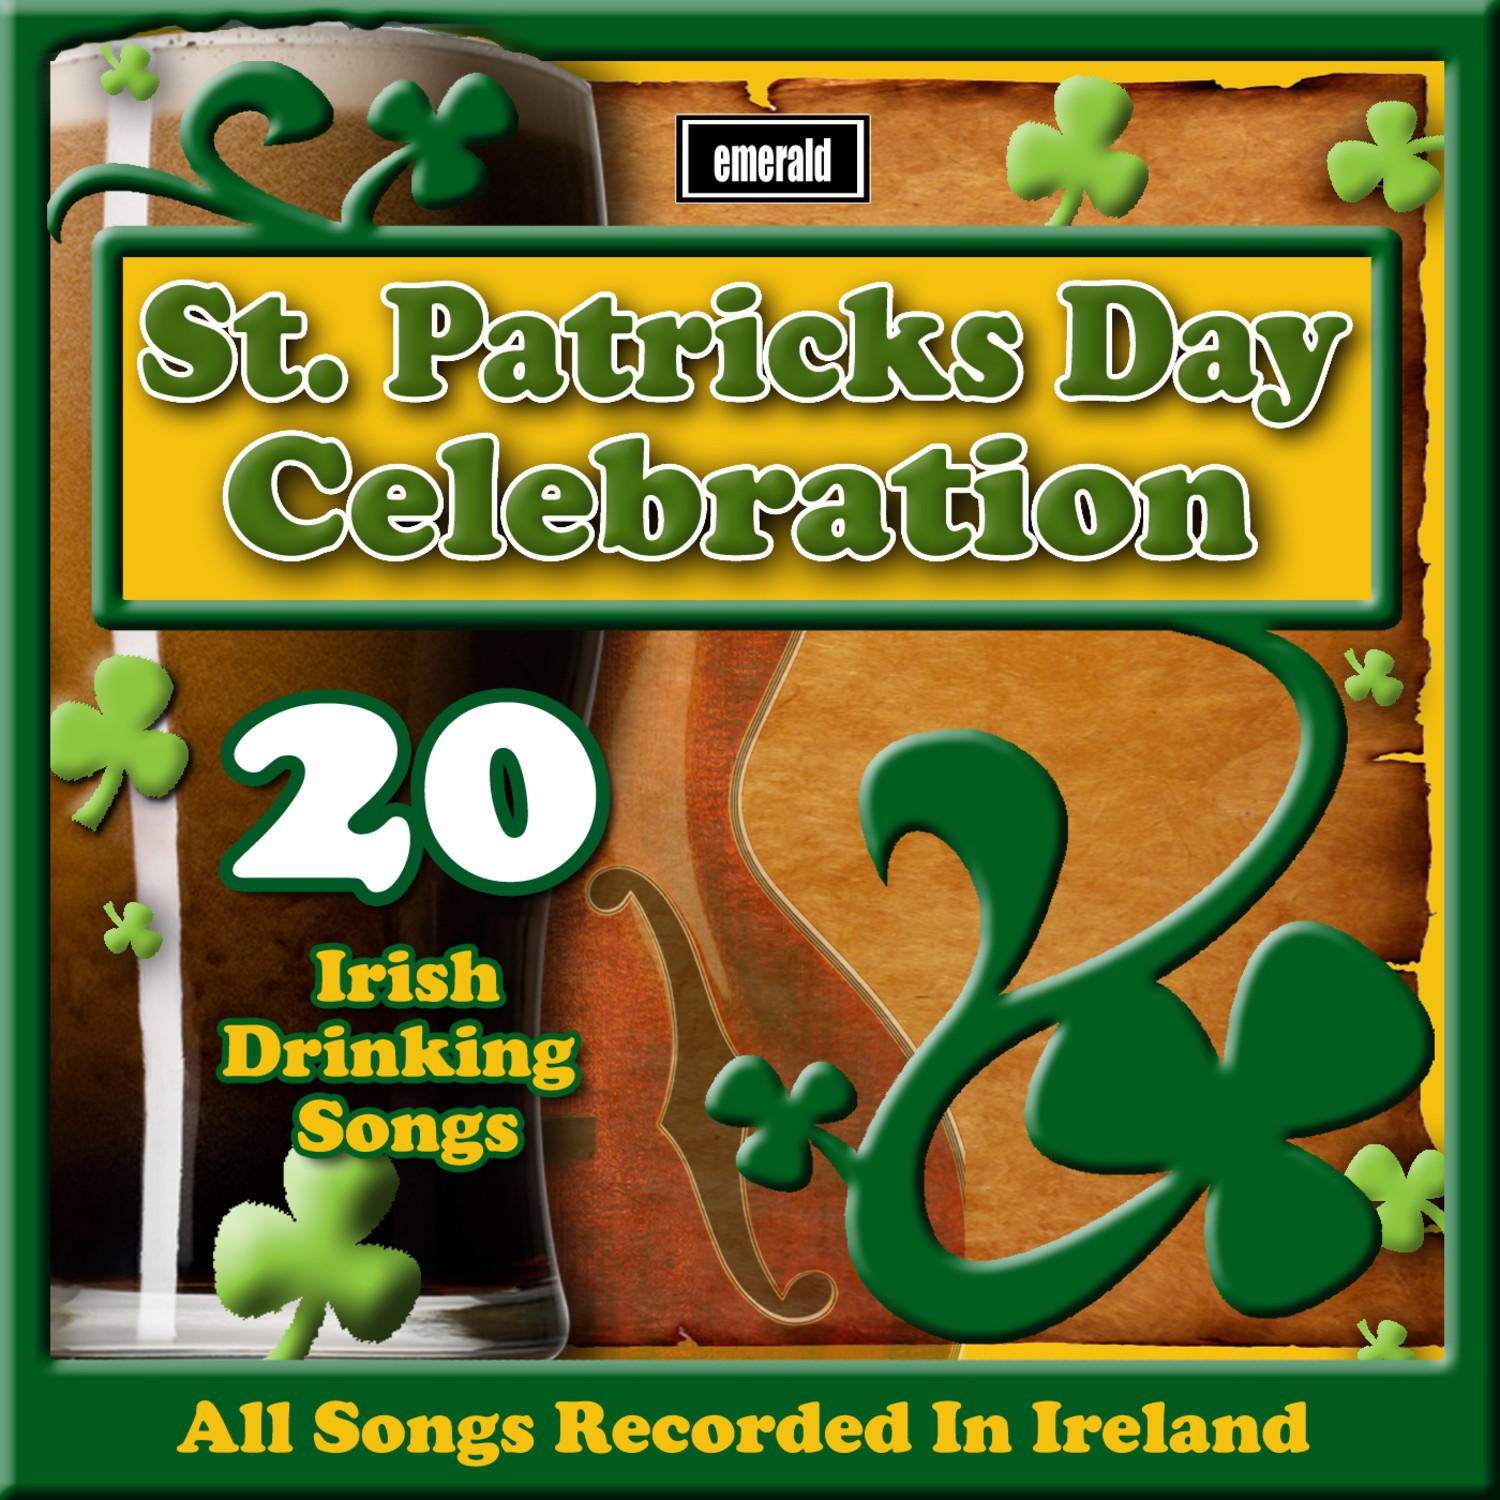 St. Patrick's Day Celebration - 20 Irish Drinking Songs